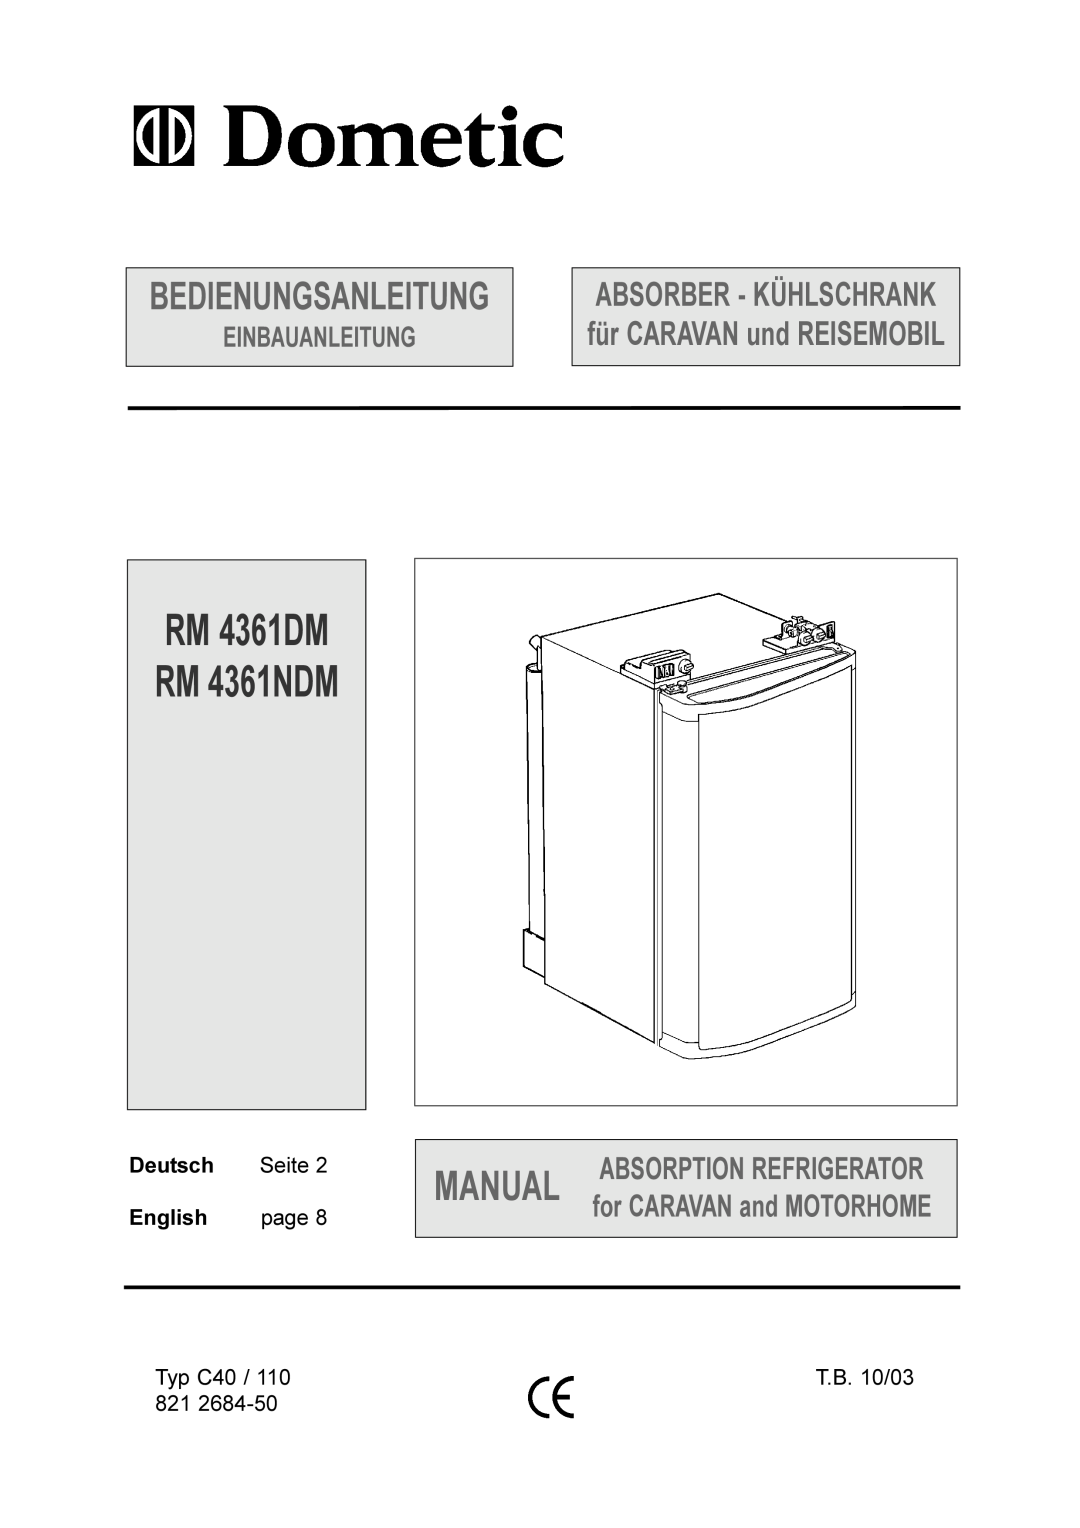 Dometic manual Einbauanleitung, RM 4361DM RM 4361NDM, Manual, Bedienungsanleitung, Absorption Refrigerator 